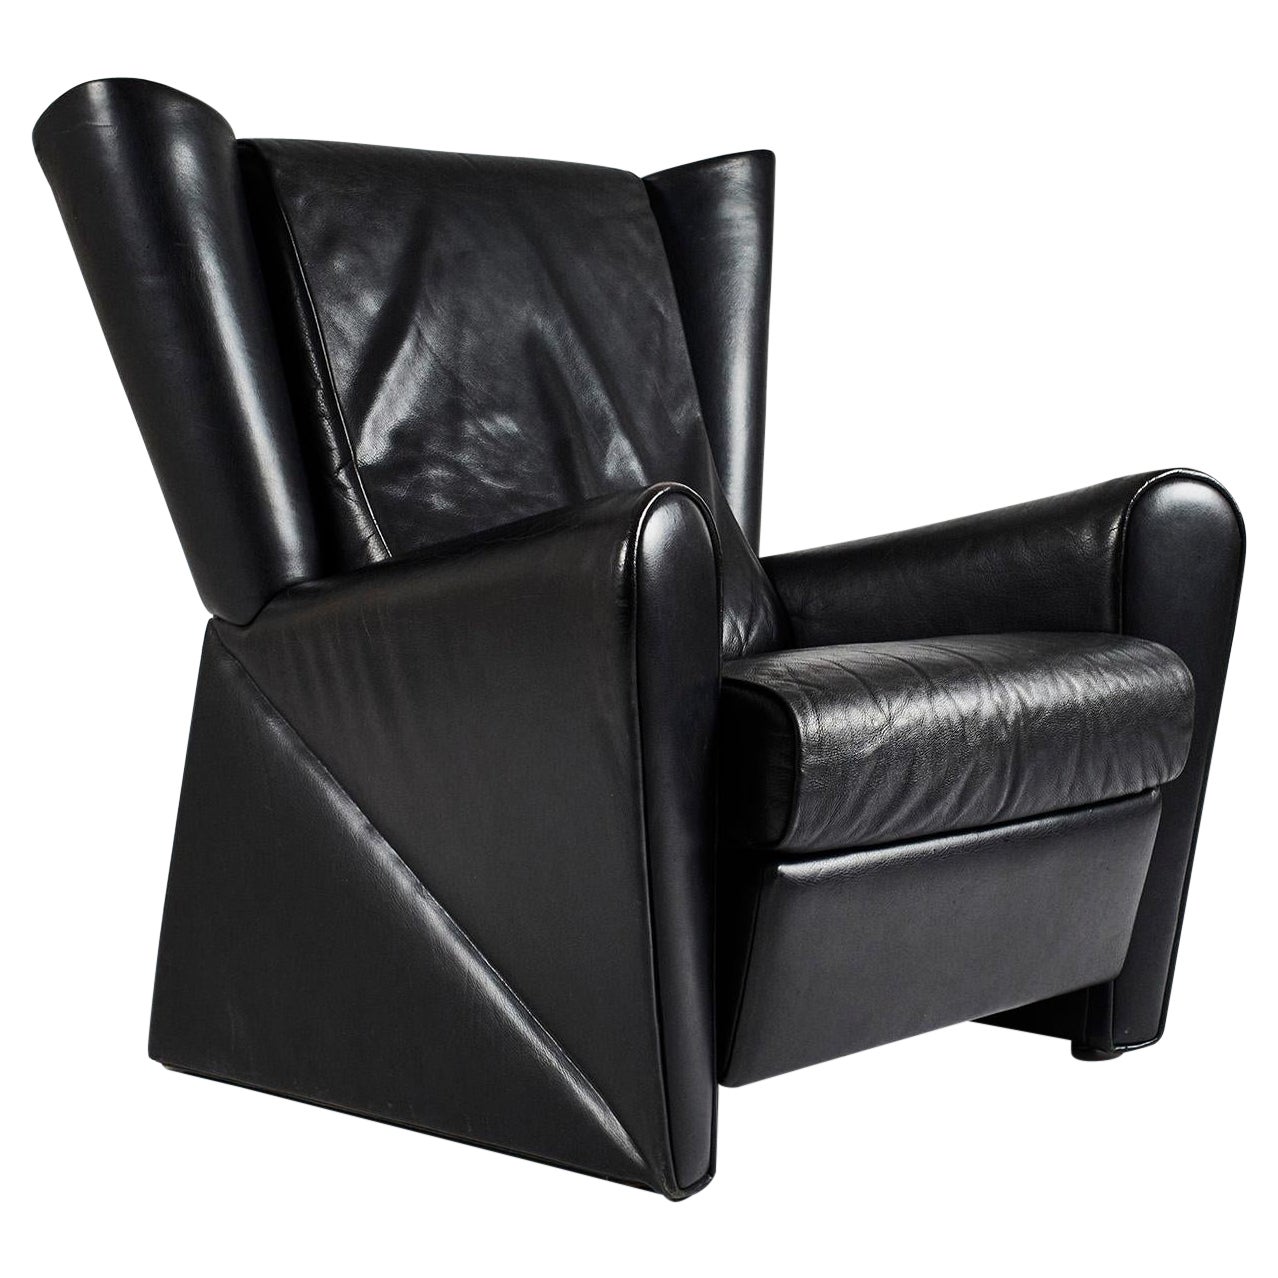 Alessandro Mendini, San Leonardo black leather armchair for Matteo Grassi, 1986